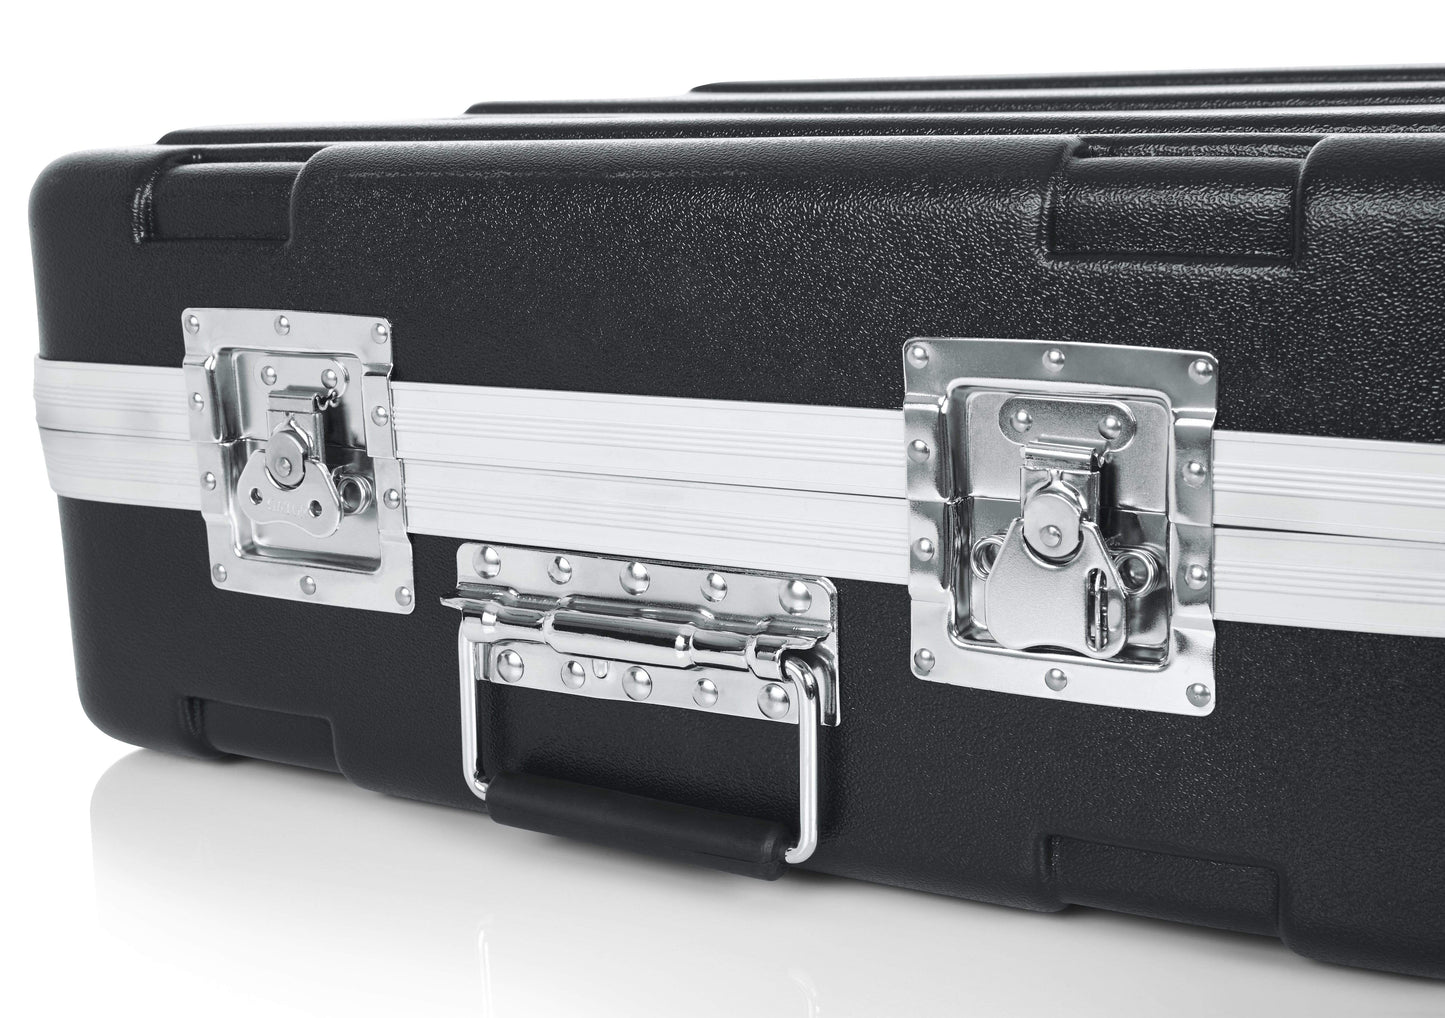 Gator GMIX1718 ATA-Style Mixer & Equipment Case - ProSound and Stage Lighting